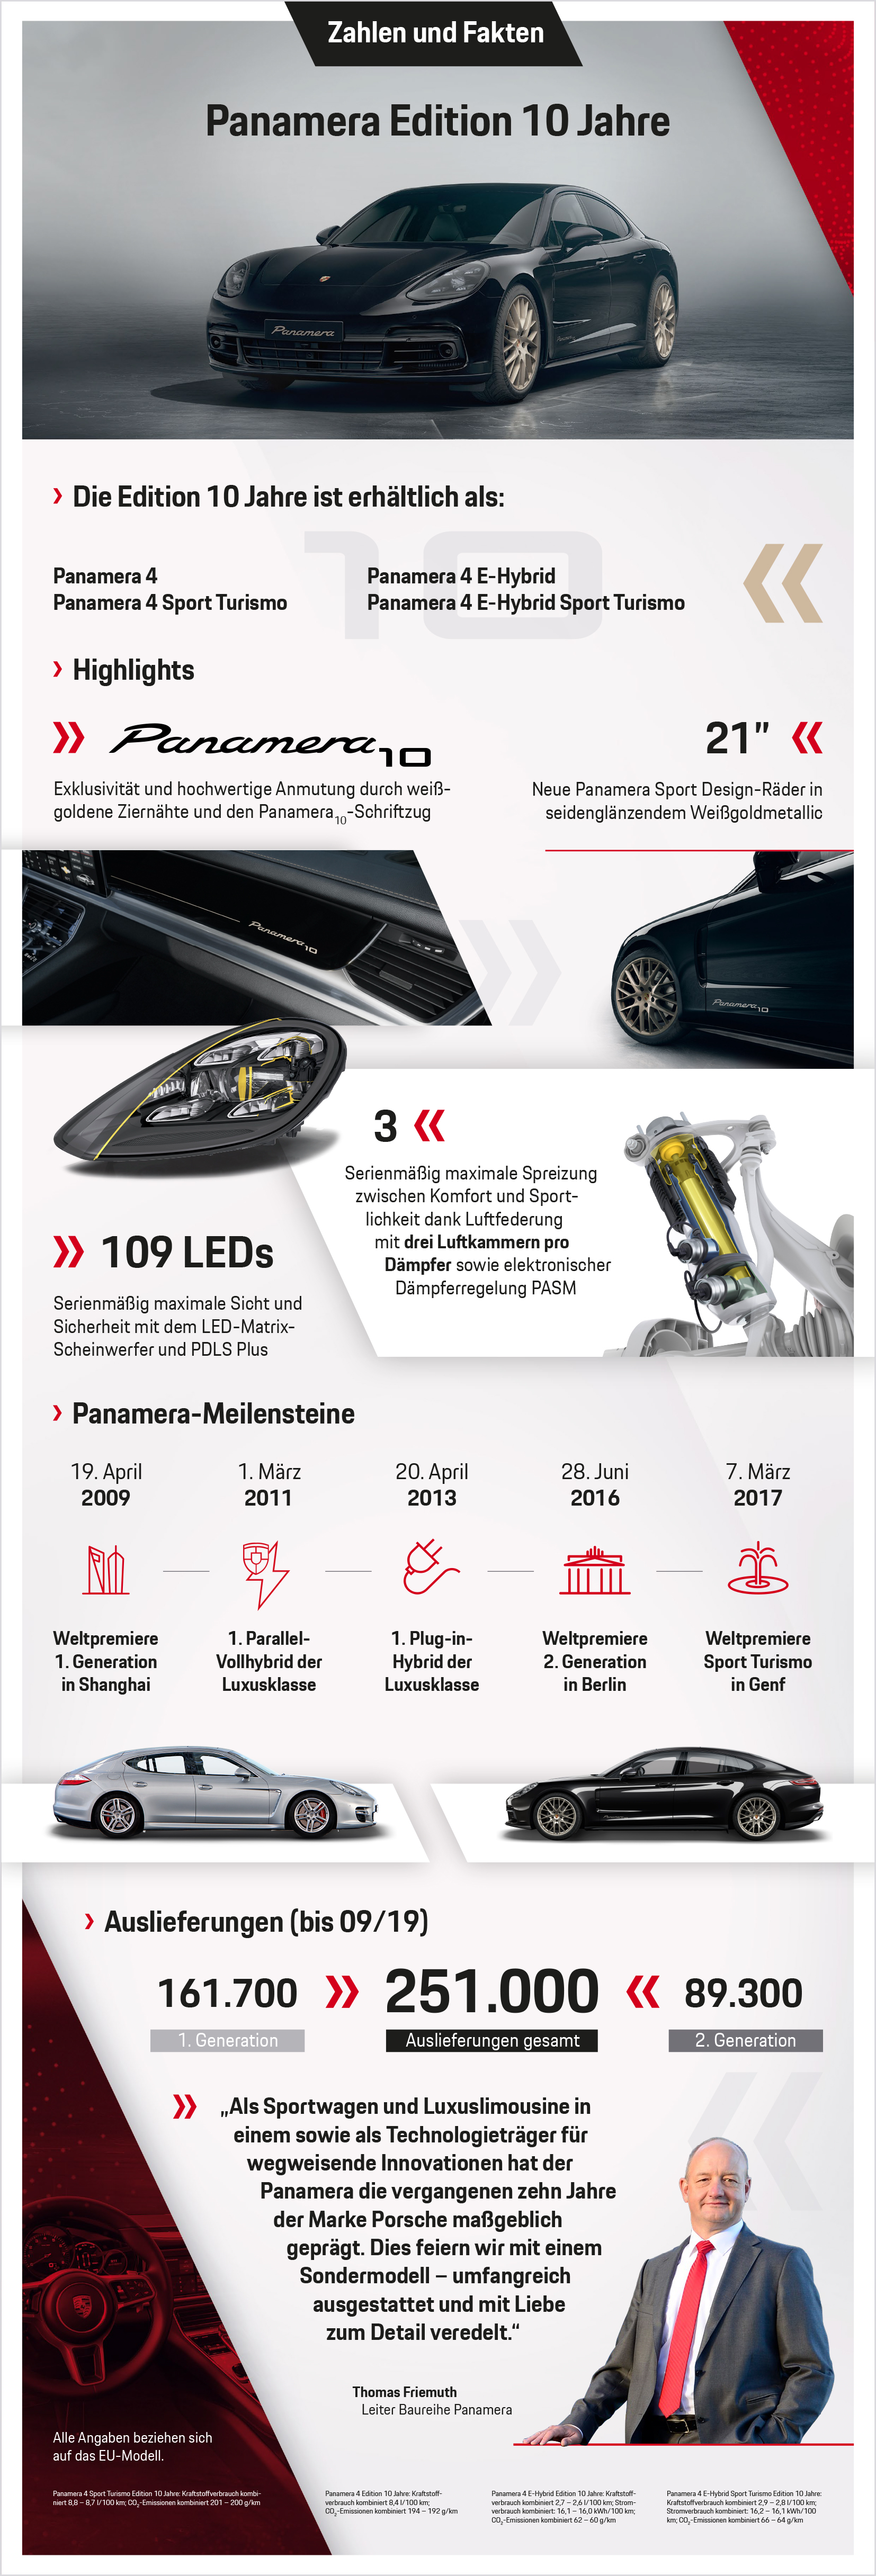 Panamera Edition 10 Jahre, Infografik, 2019, Porsche AG